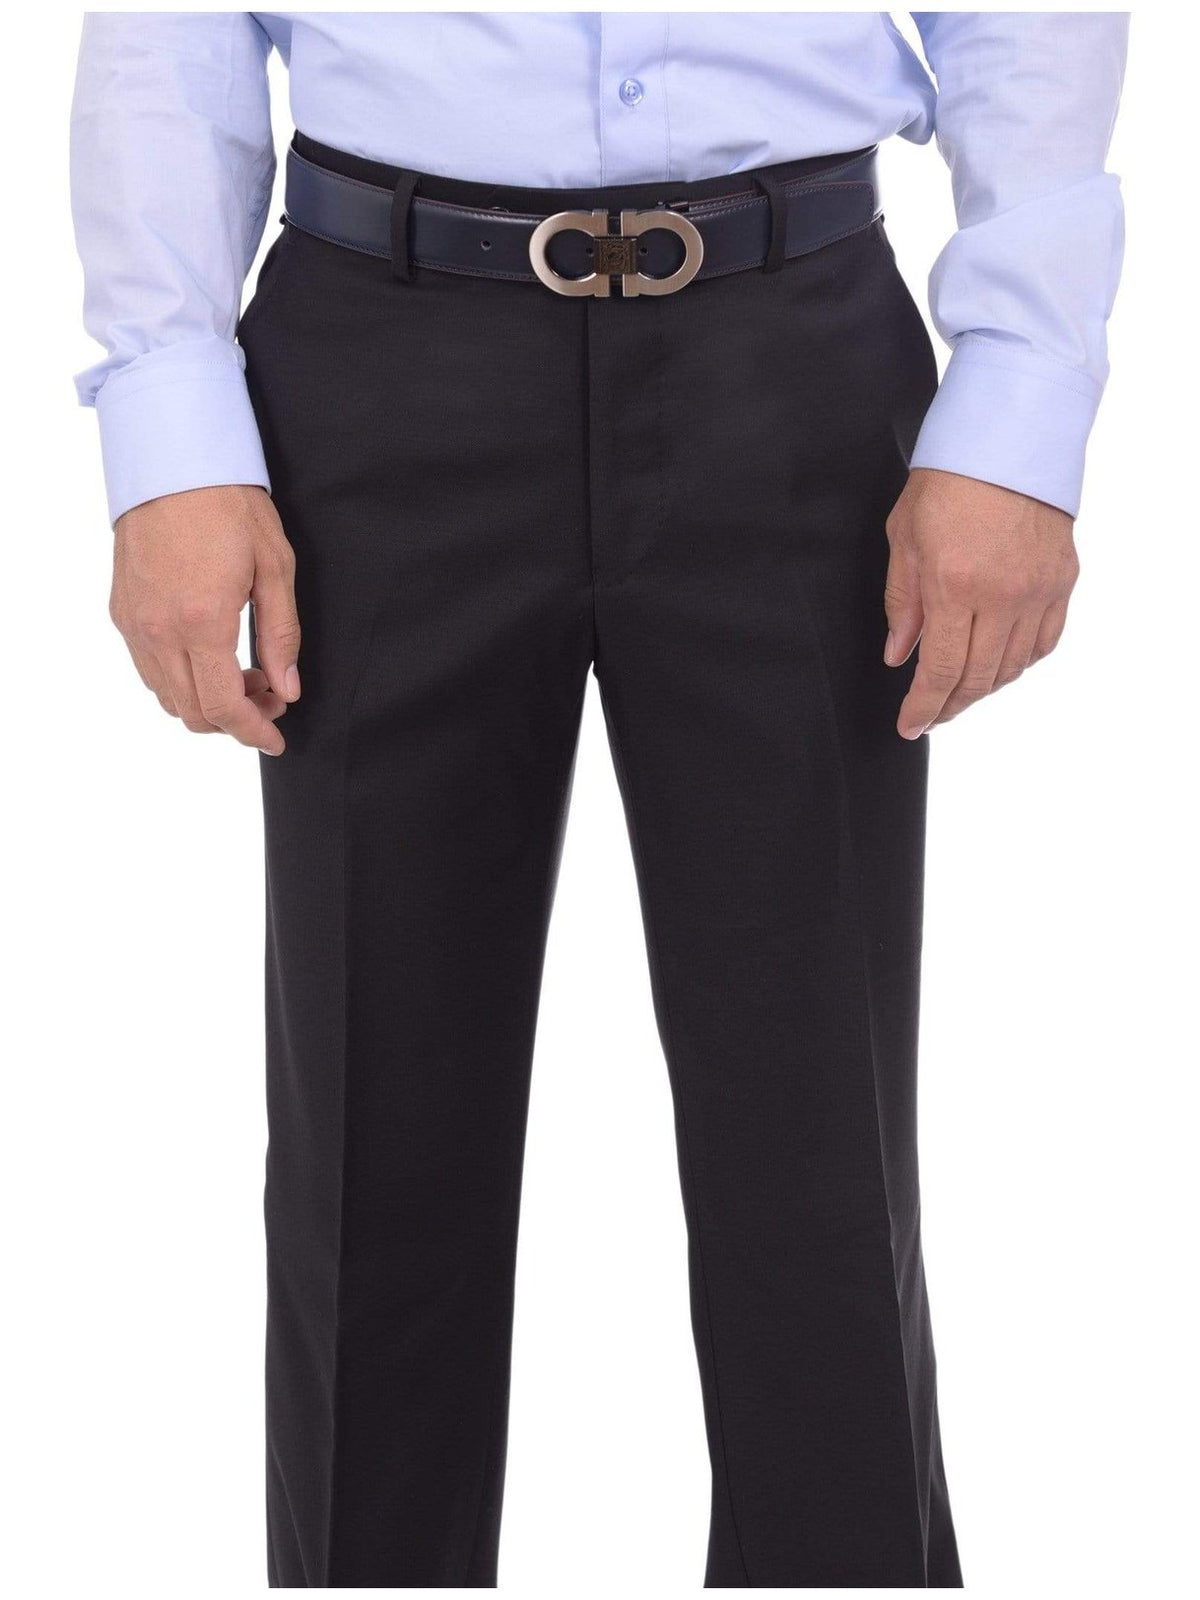 Bartorelli PANTS Mens Napoli Extra Slim Fit Solid Black Flat Front Wool Cashmere Dress Pants